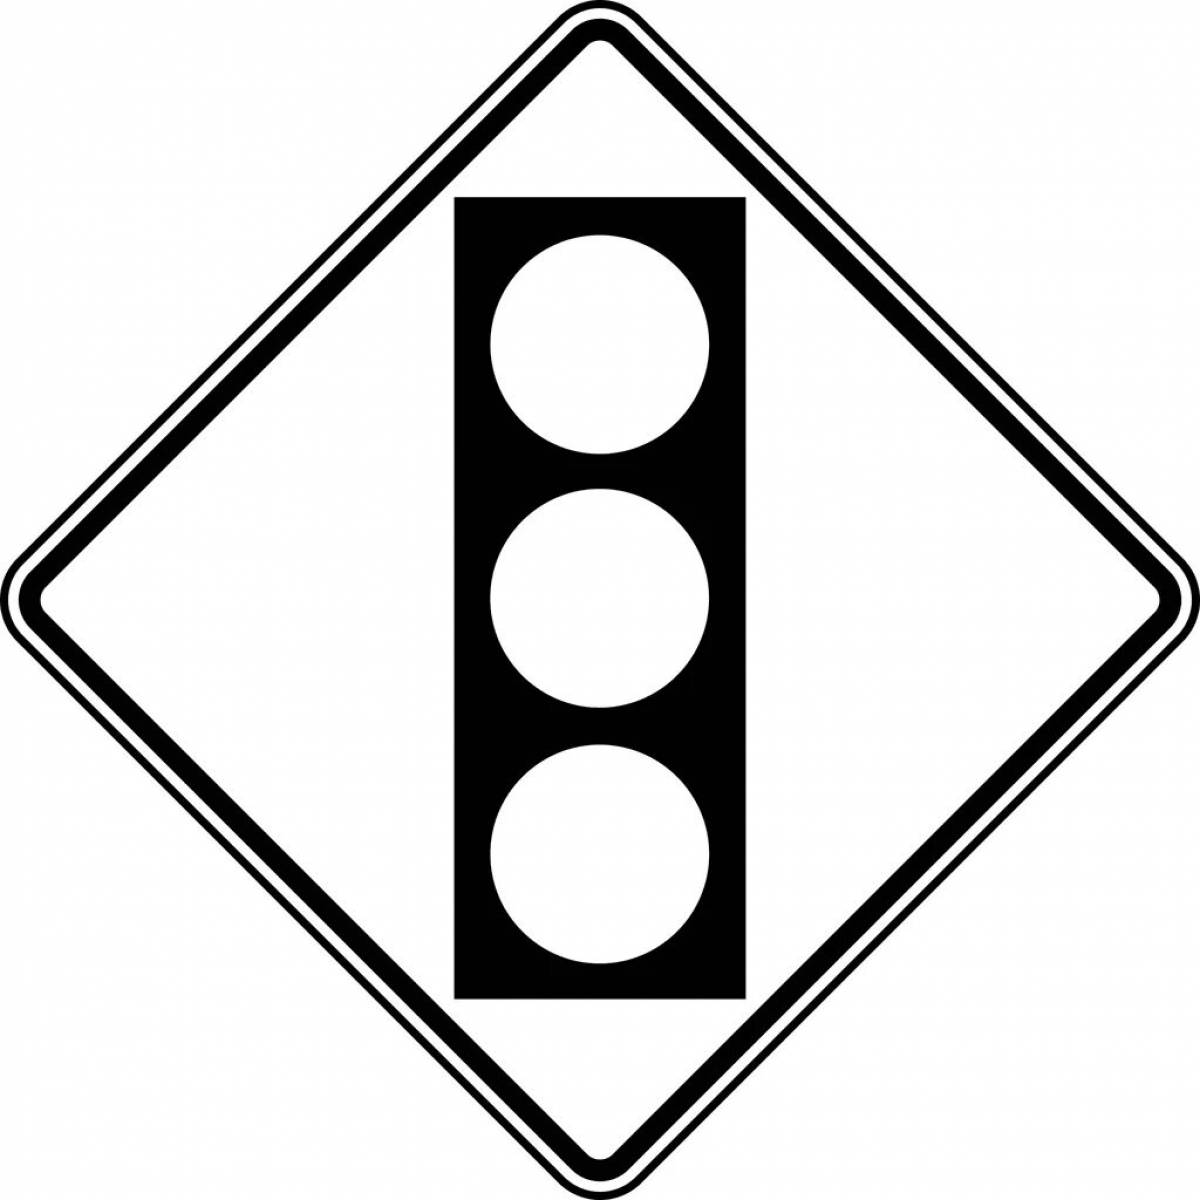 Traffic light sign #9